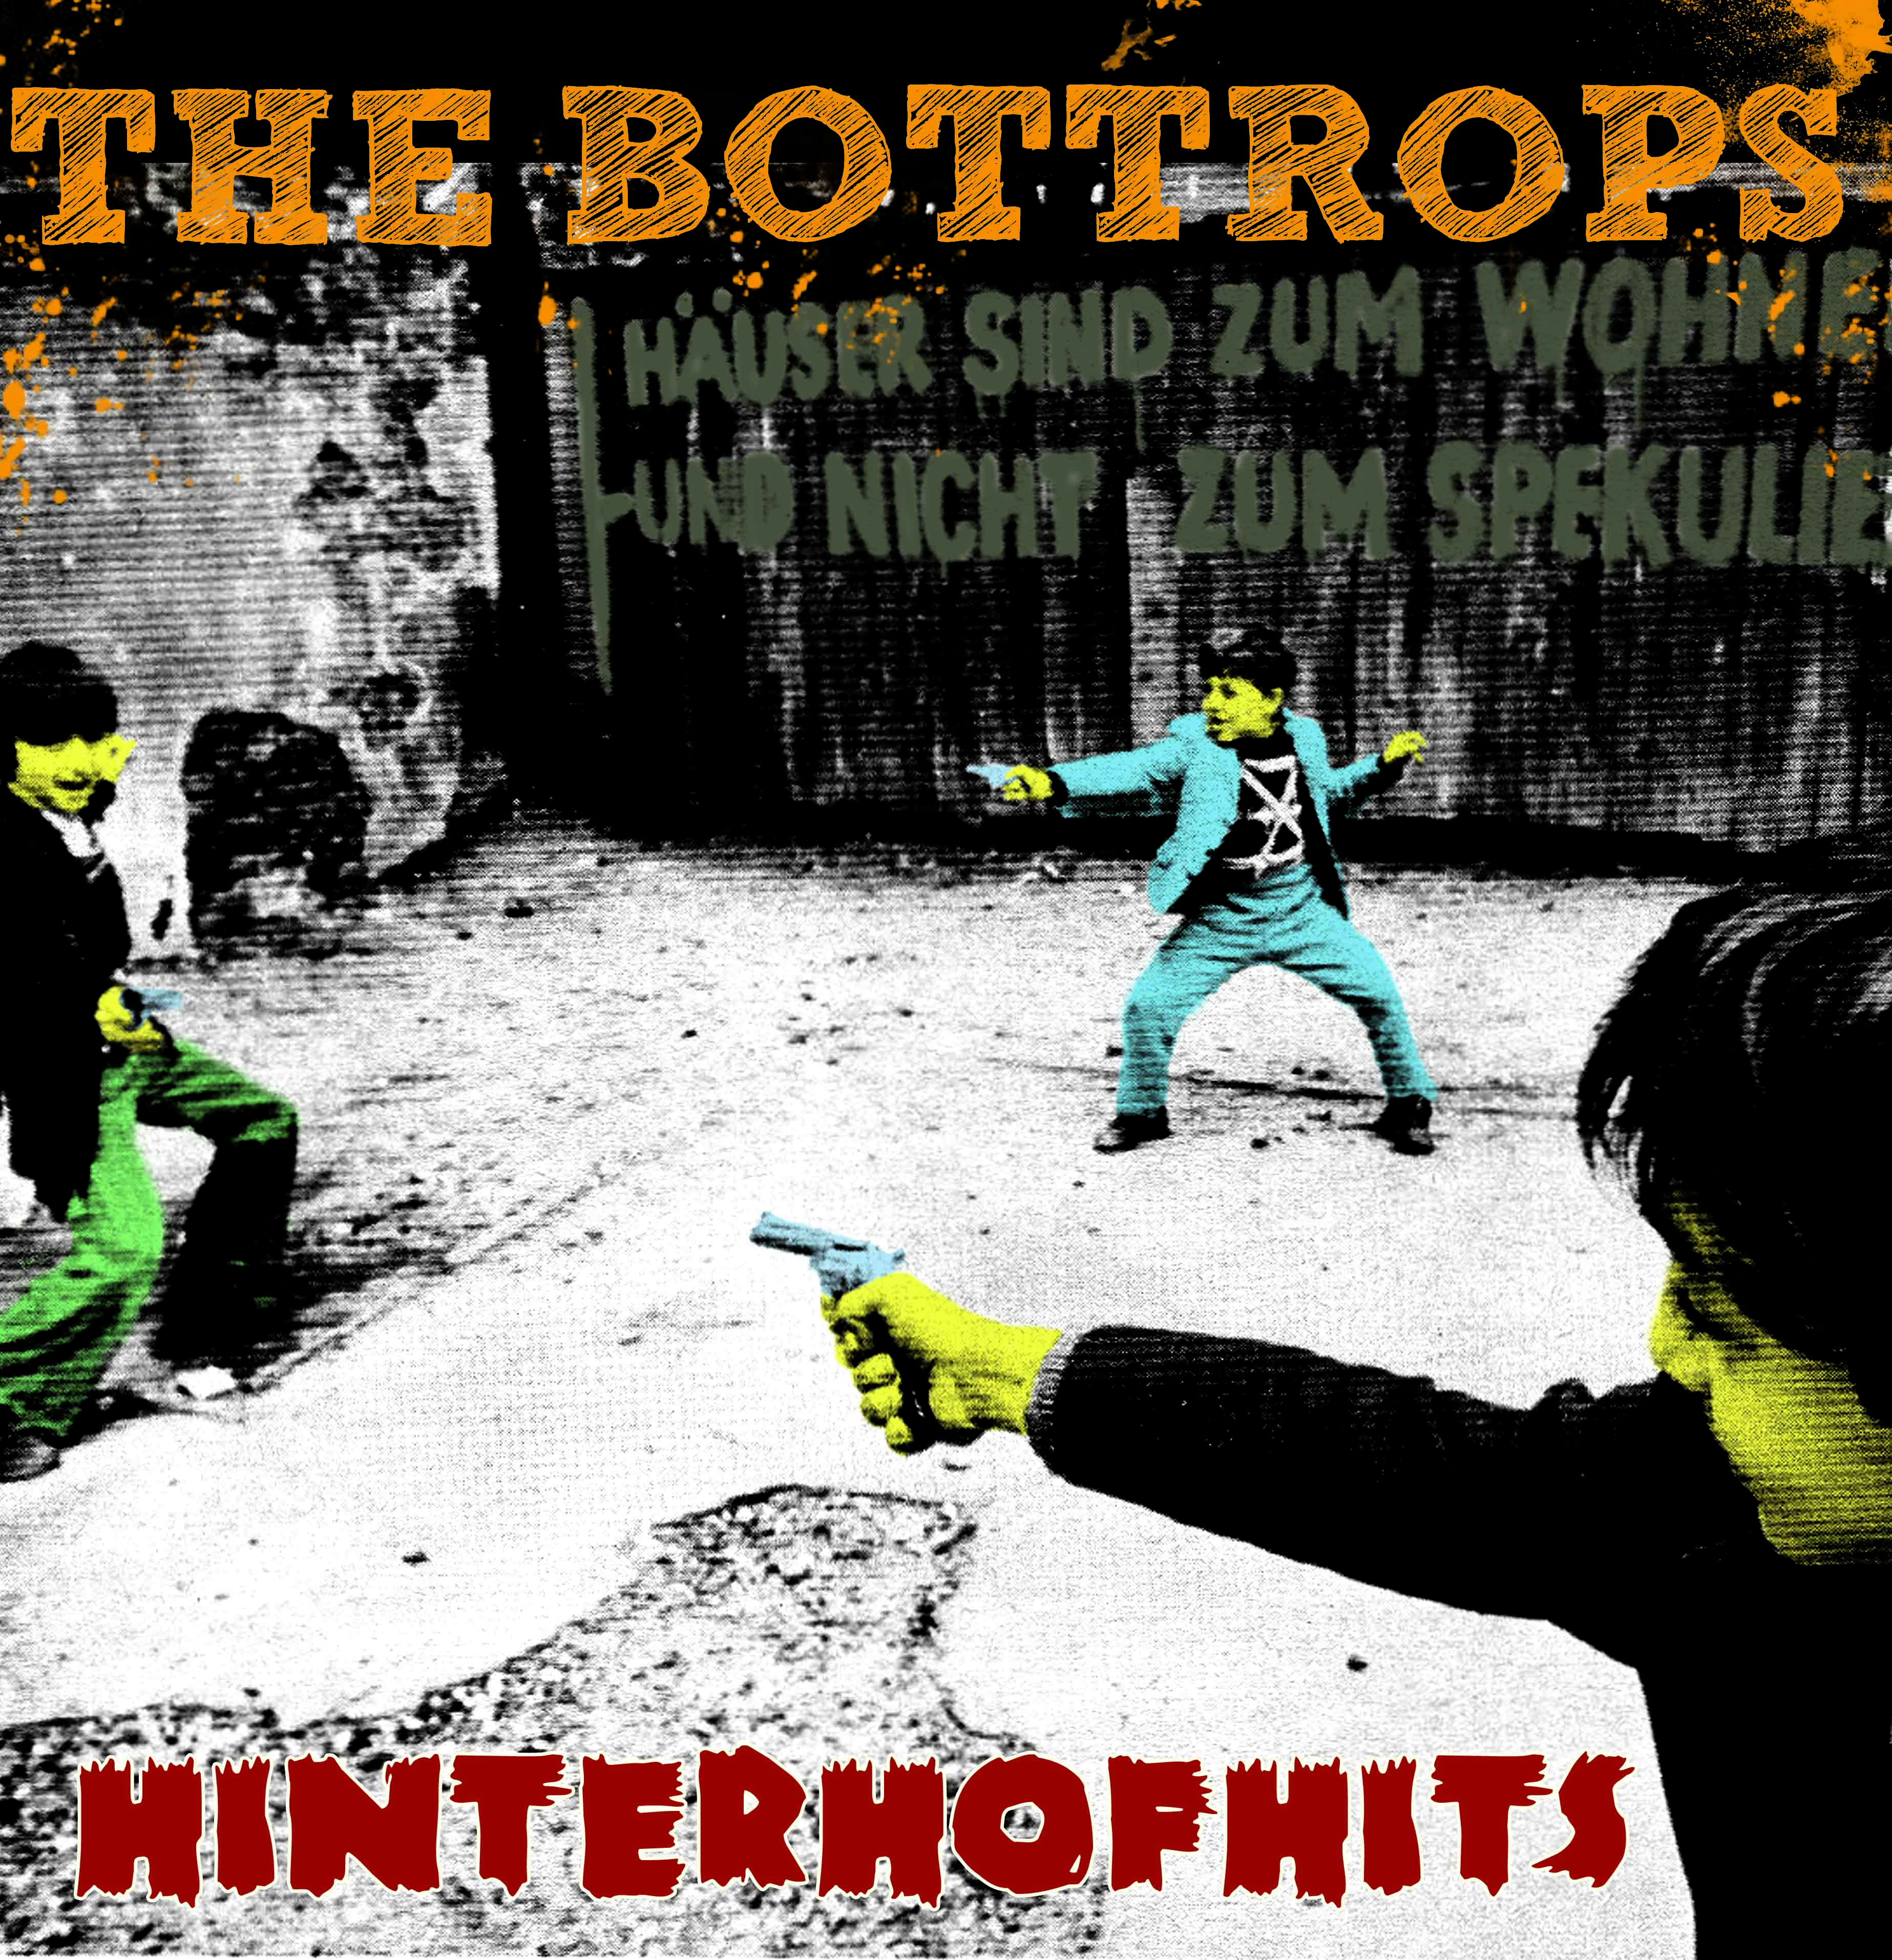 The Bottrops - Hinterhofhits